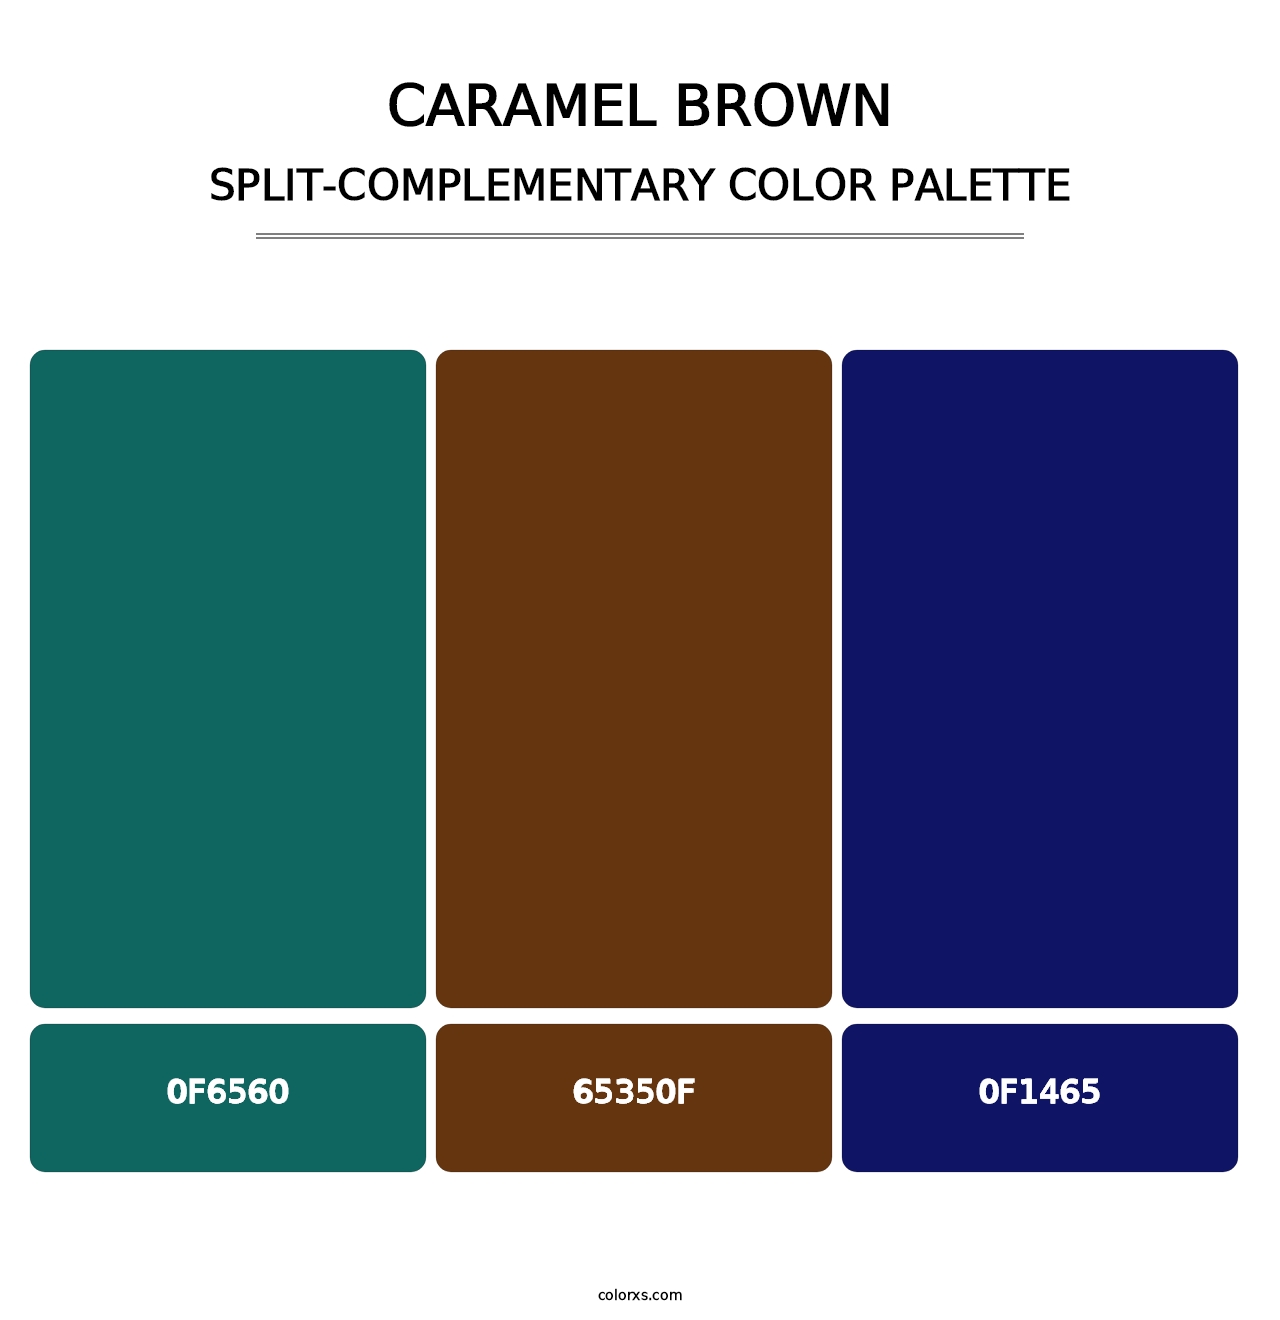 Caramel Brown - Split-Complementary Color Palette